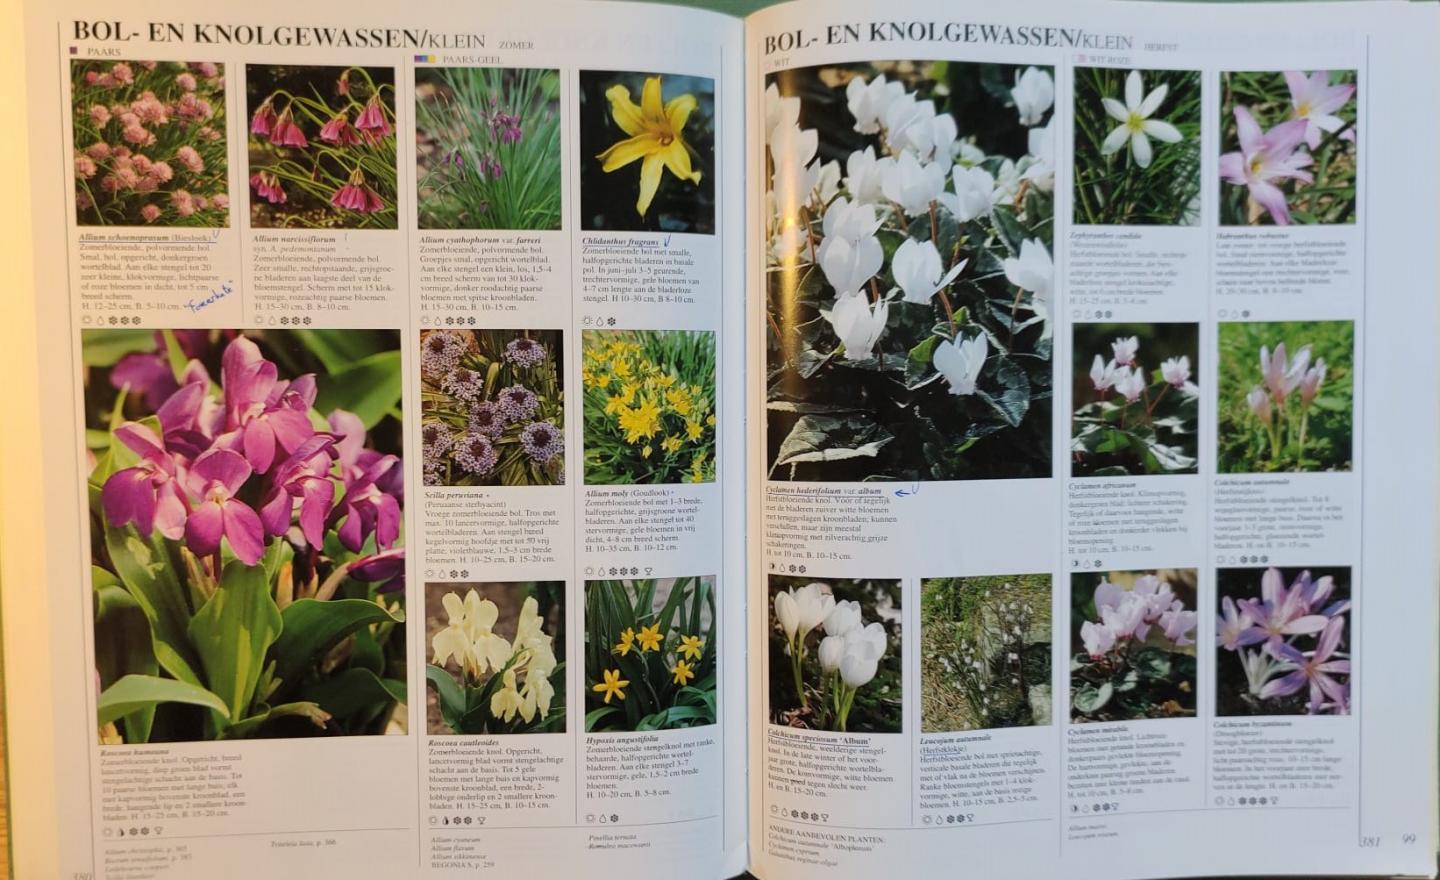 Brickell, Christopher - Atrium tuinplantenencyclopedie / druk 8